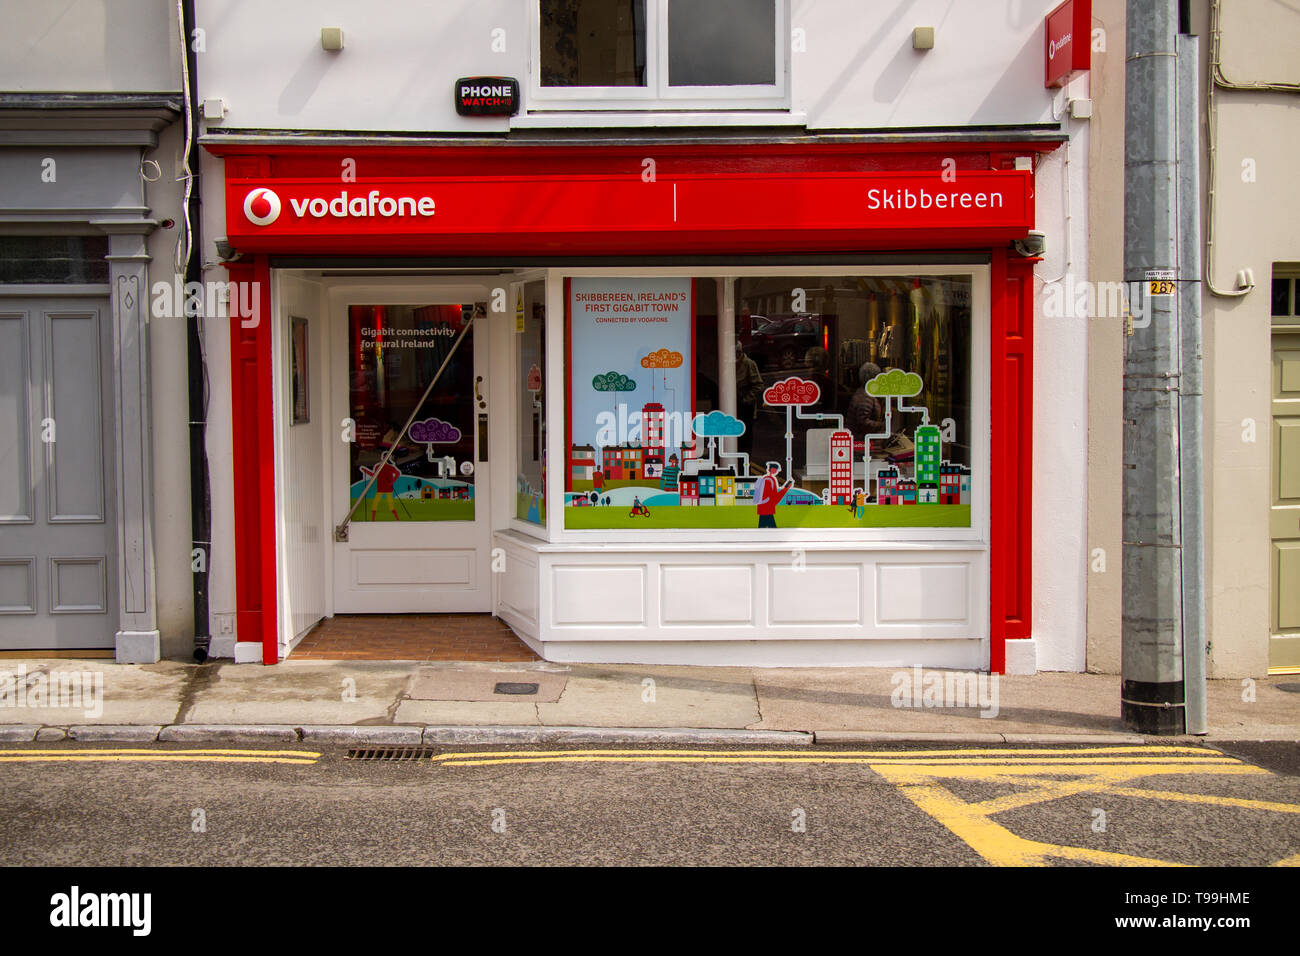 Vodafone mobile phone shop in Skibbereen Ireland Stock Photo